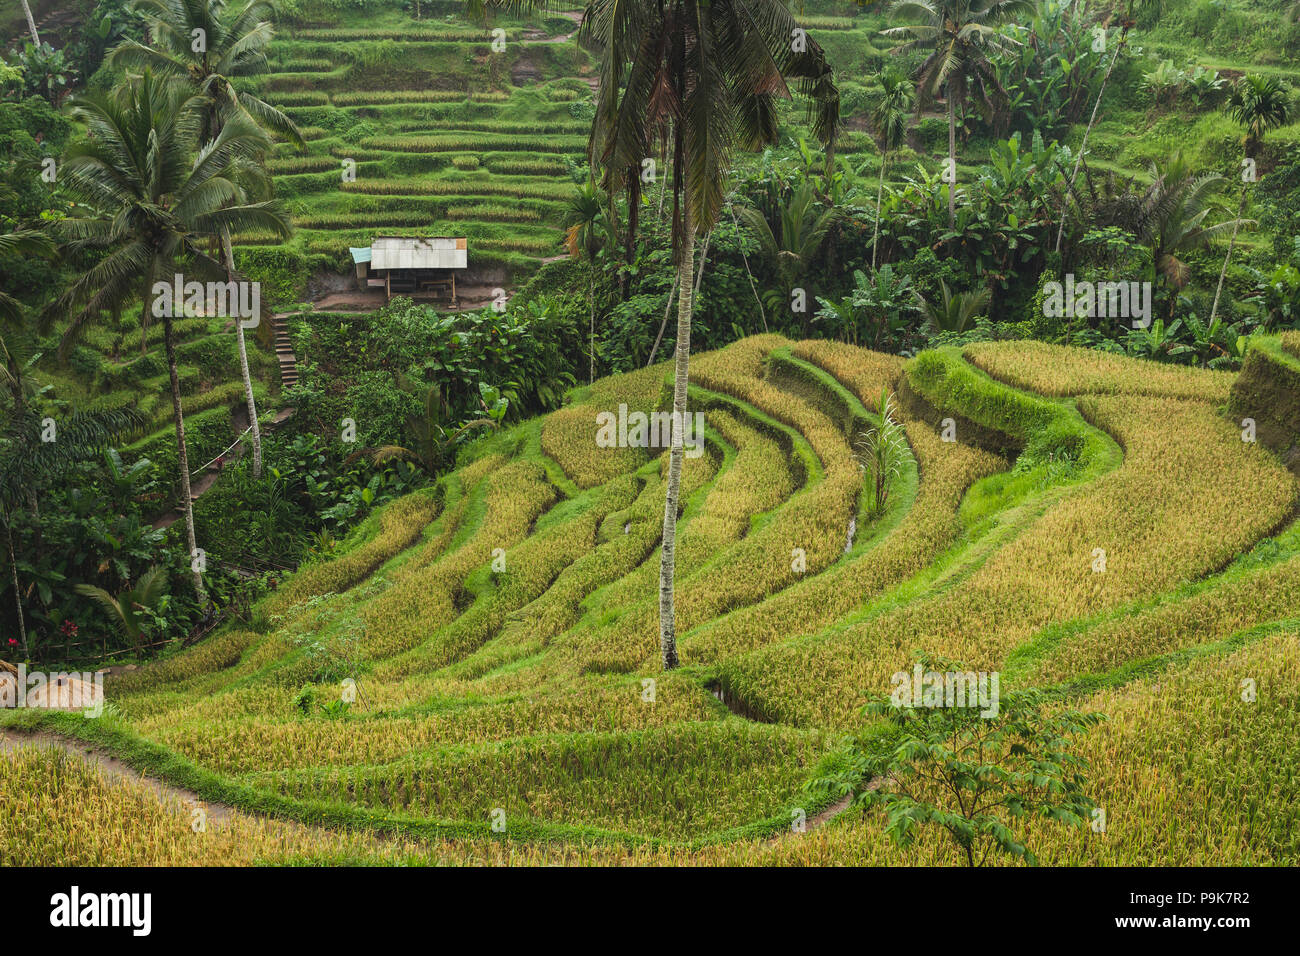 Tegalalang Ceking rice terraces in Ubud, Bali Stock Photo - Alamy